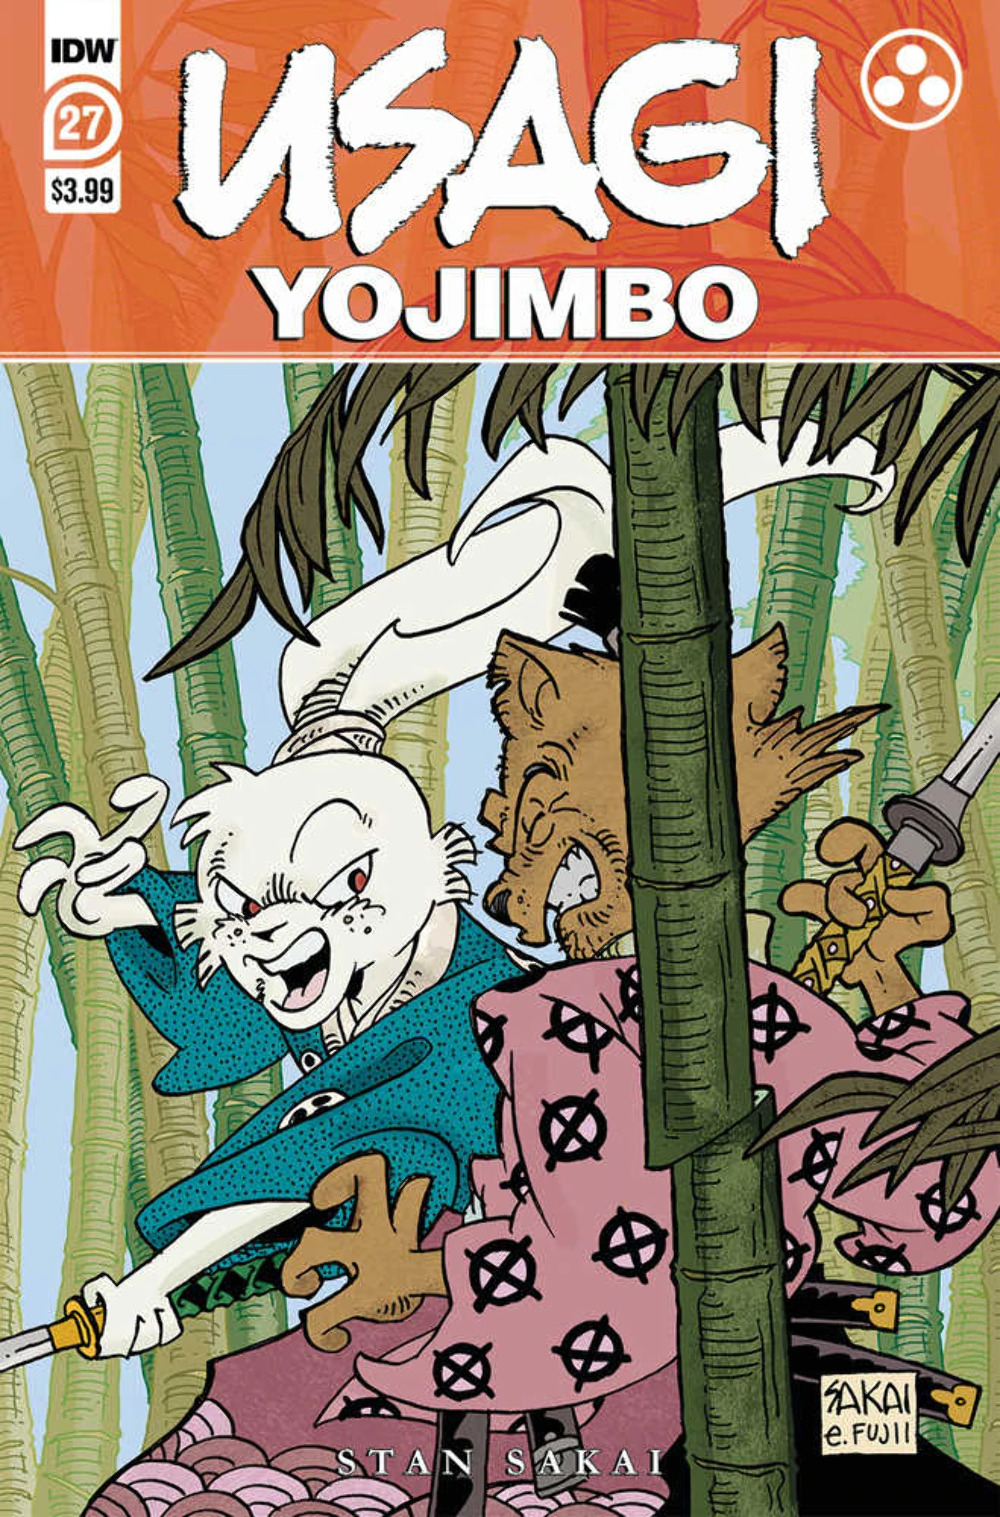 Usagi Yojimbo #27 Cover A Sakai